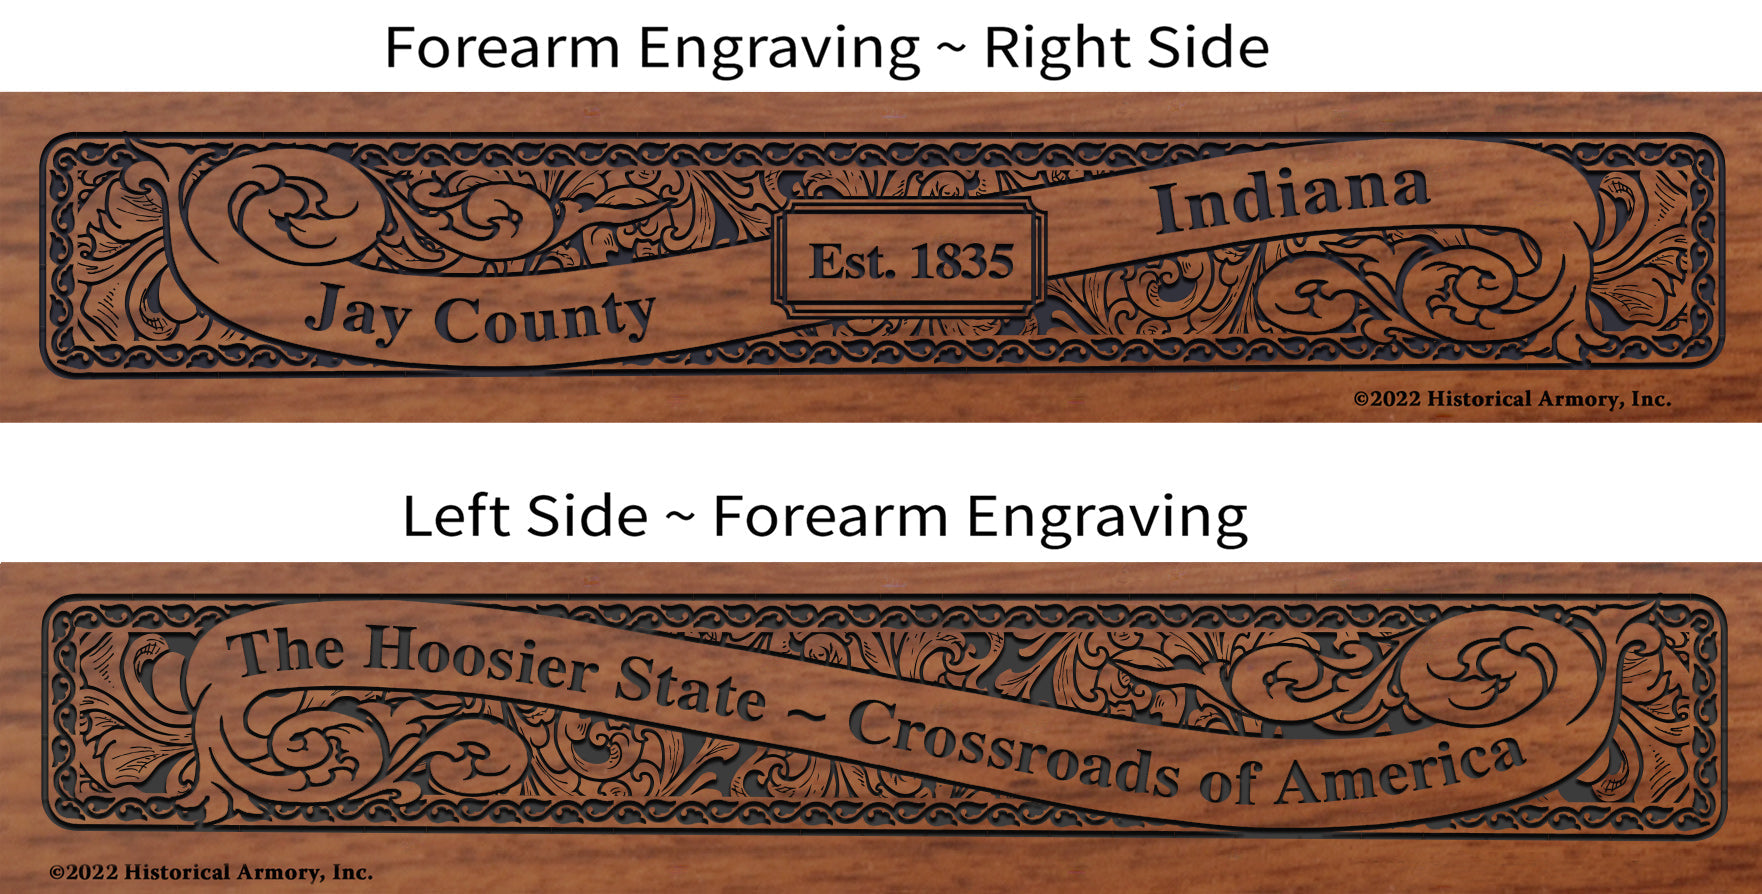 Jay County Indiana Engraved Rifle Forearm